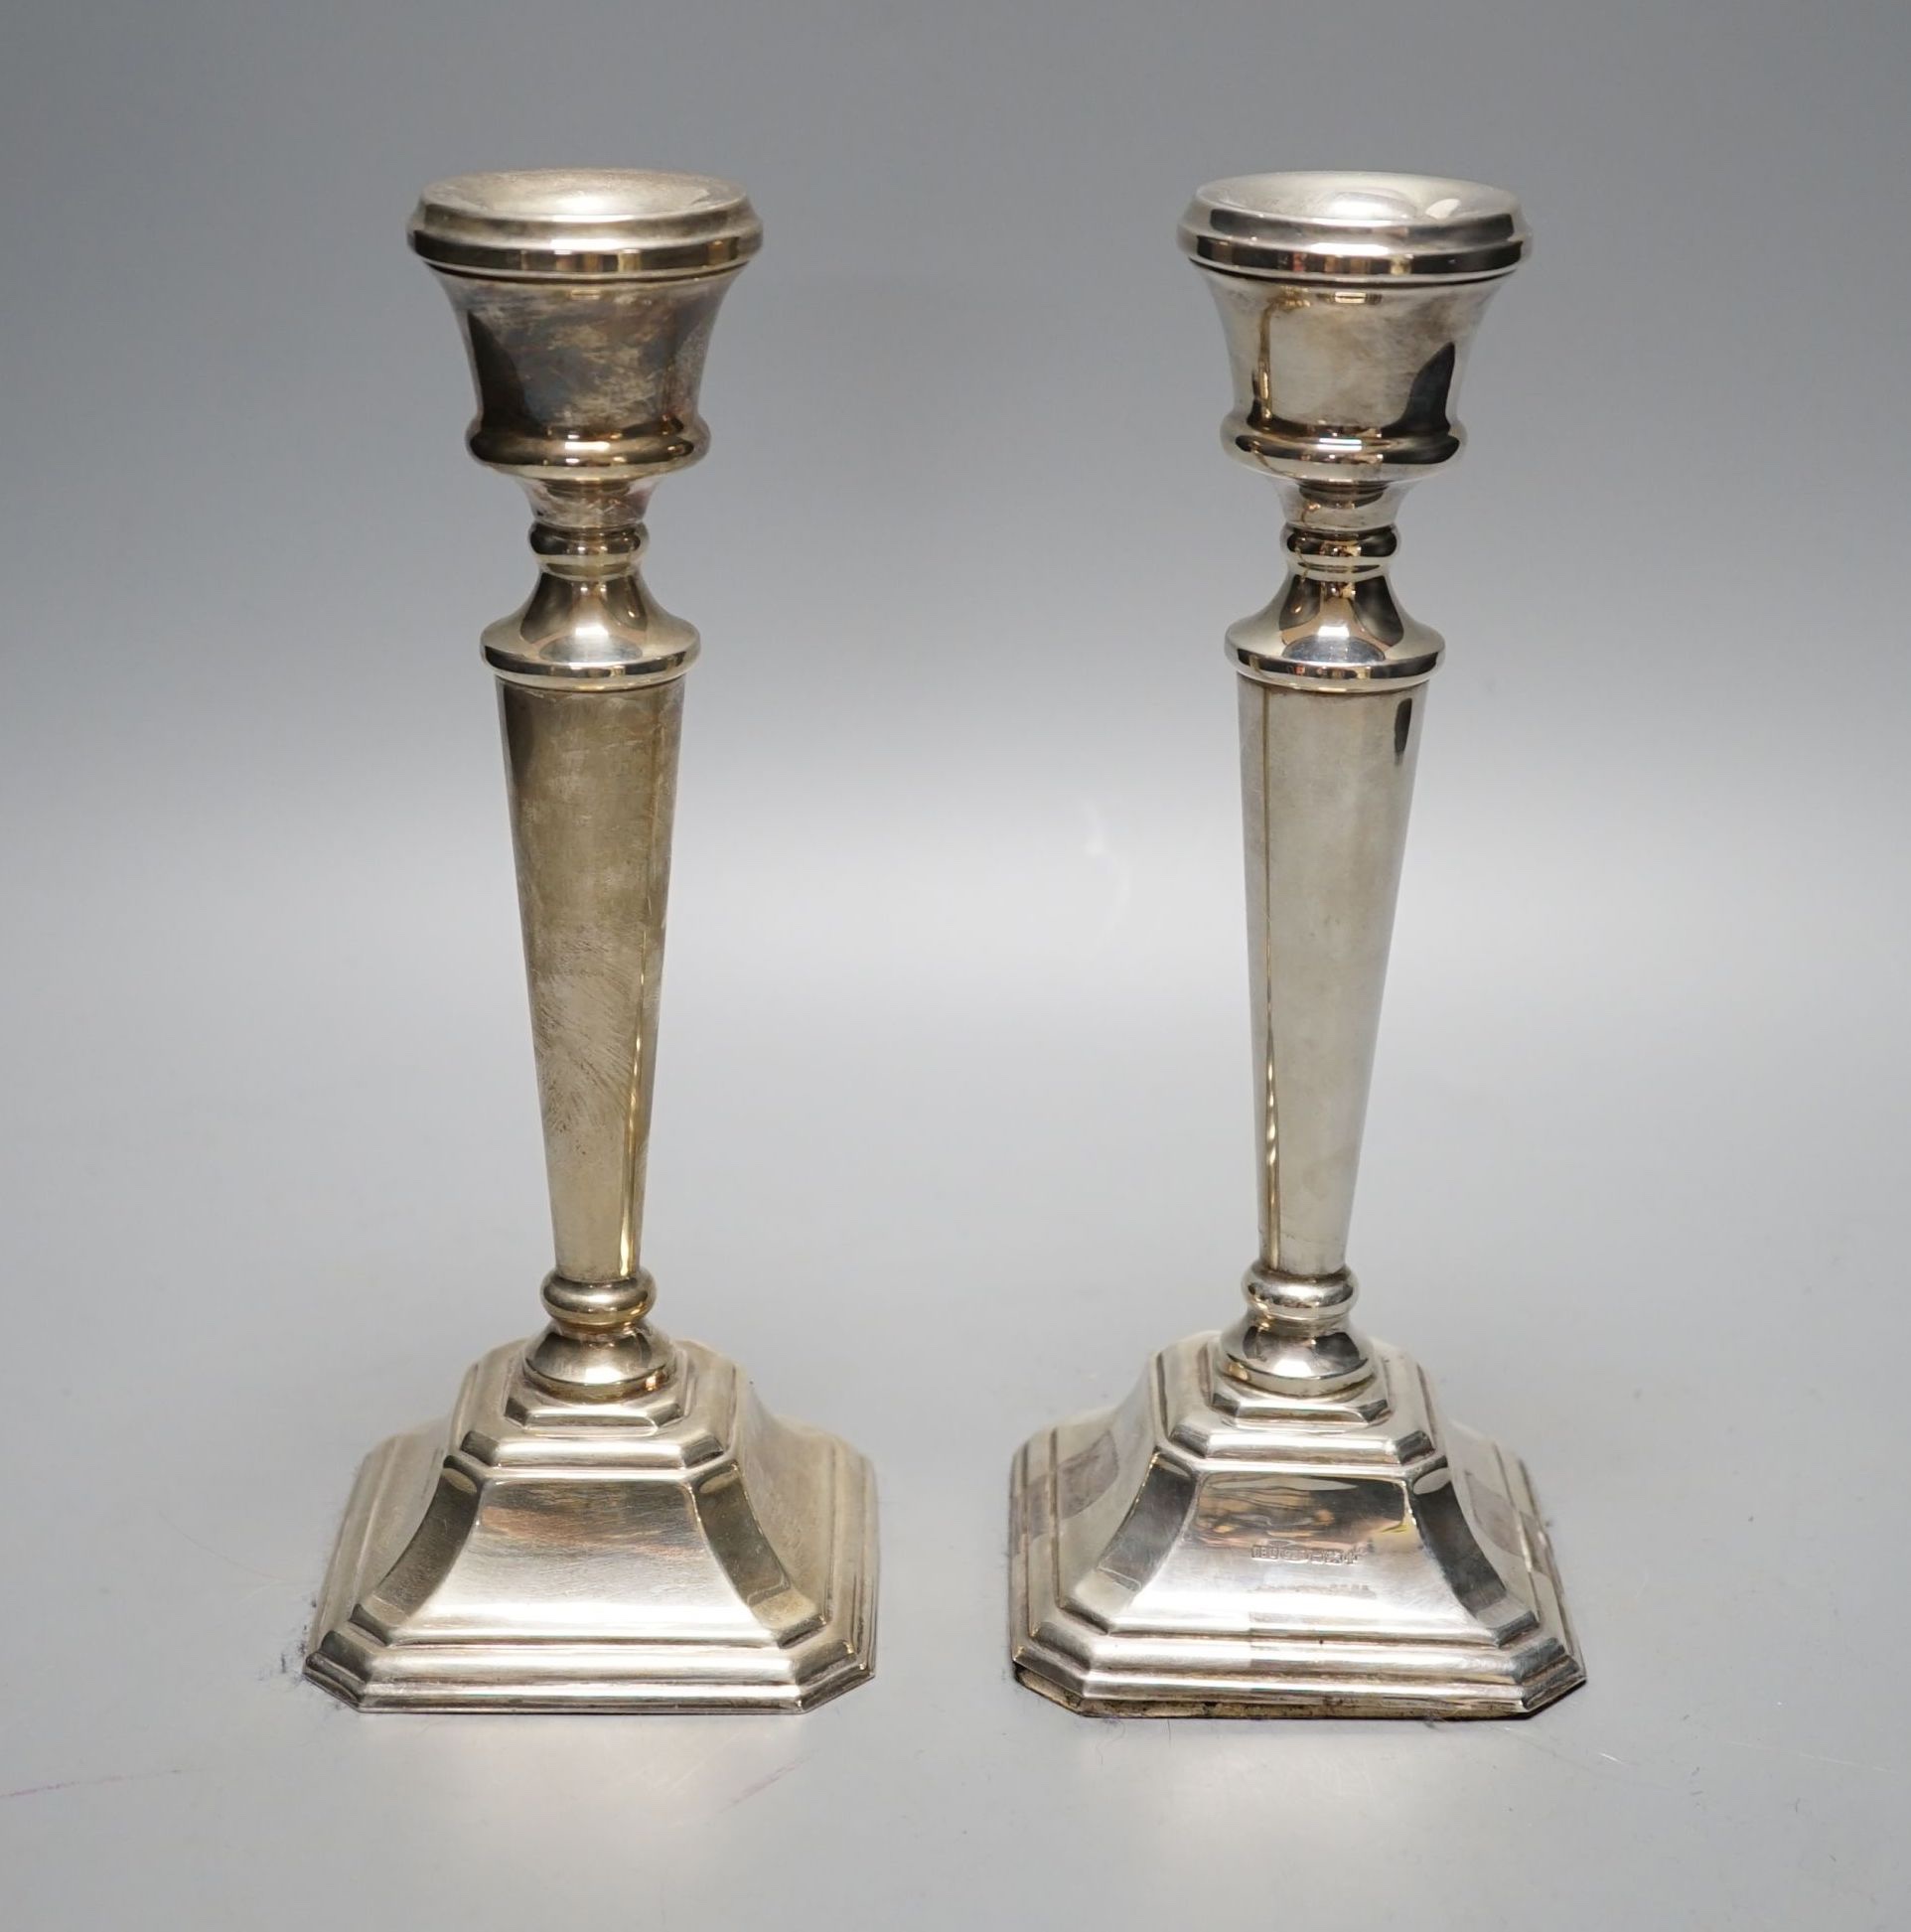 A modern pair of silver mounted candlesticks, JD Ltd, Birmingham, 2000, height 21.5cm, weighted.